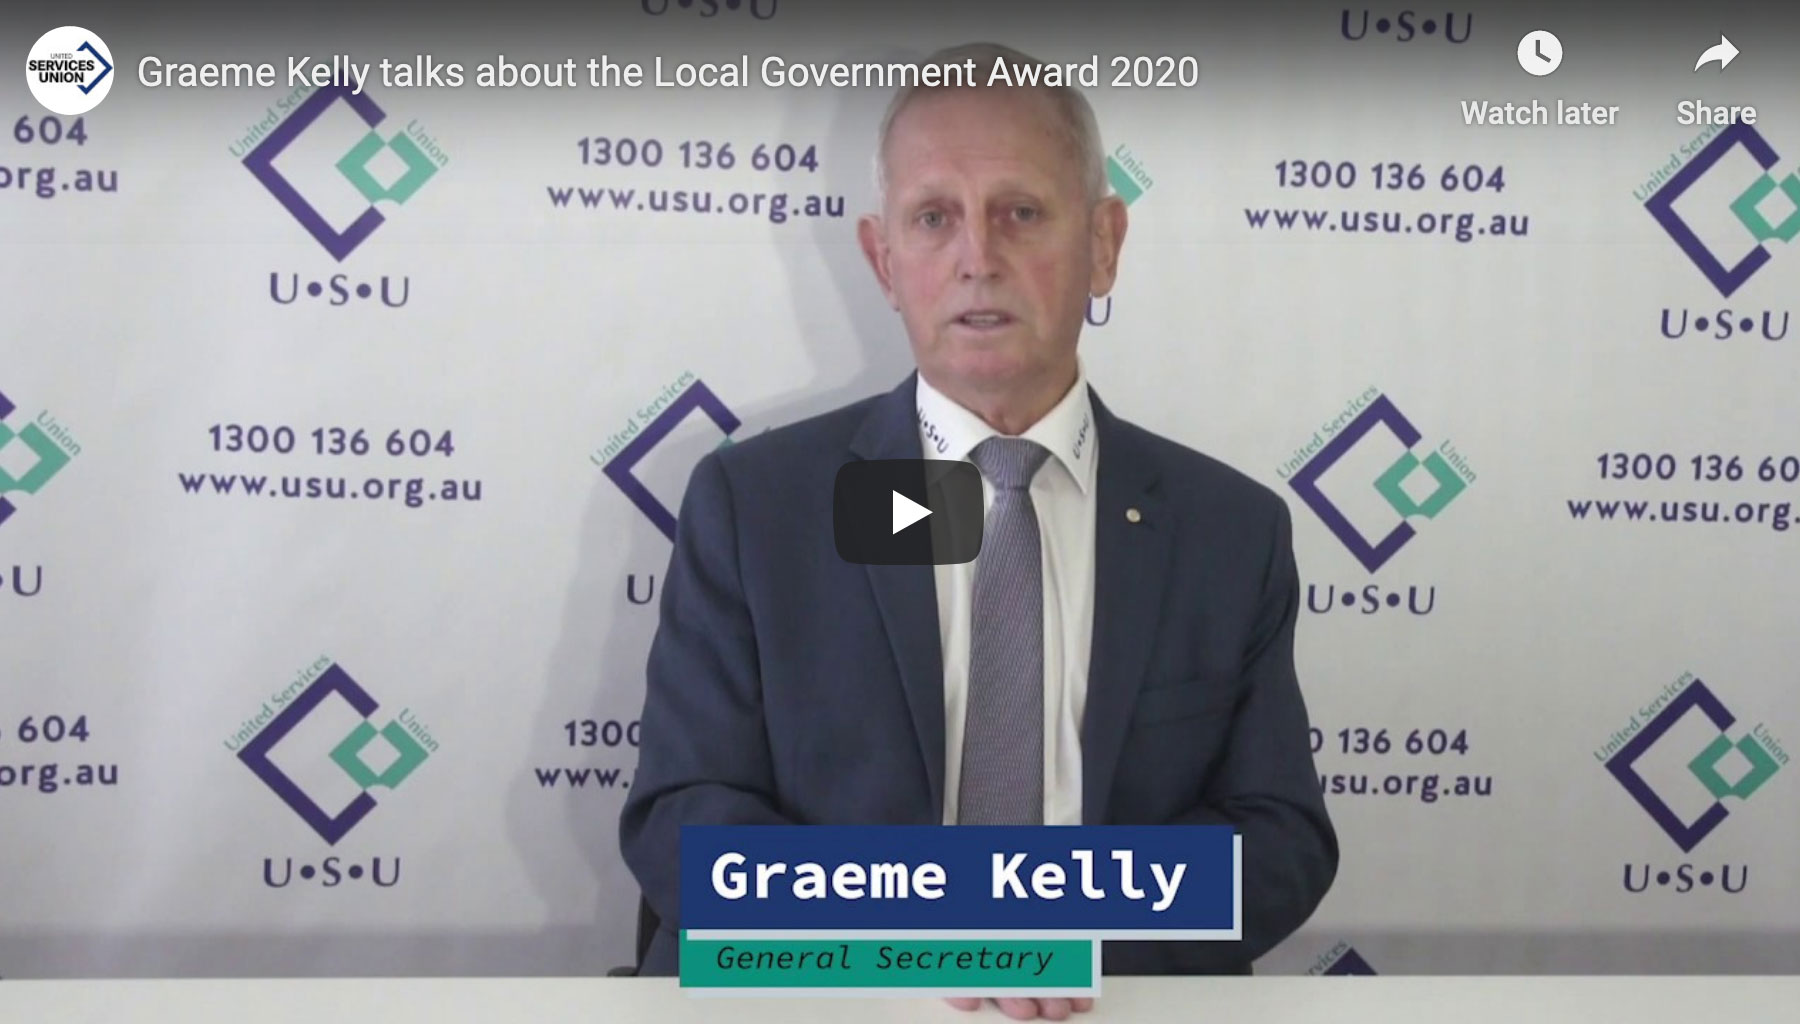 USU General Secretary Graeme Kelly introduces the new Award